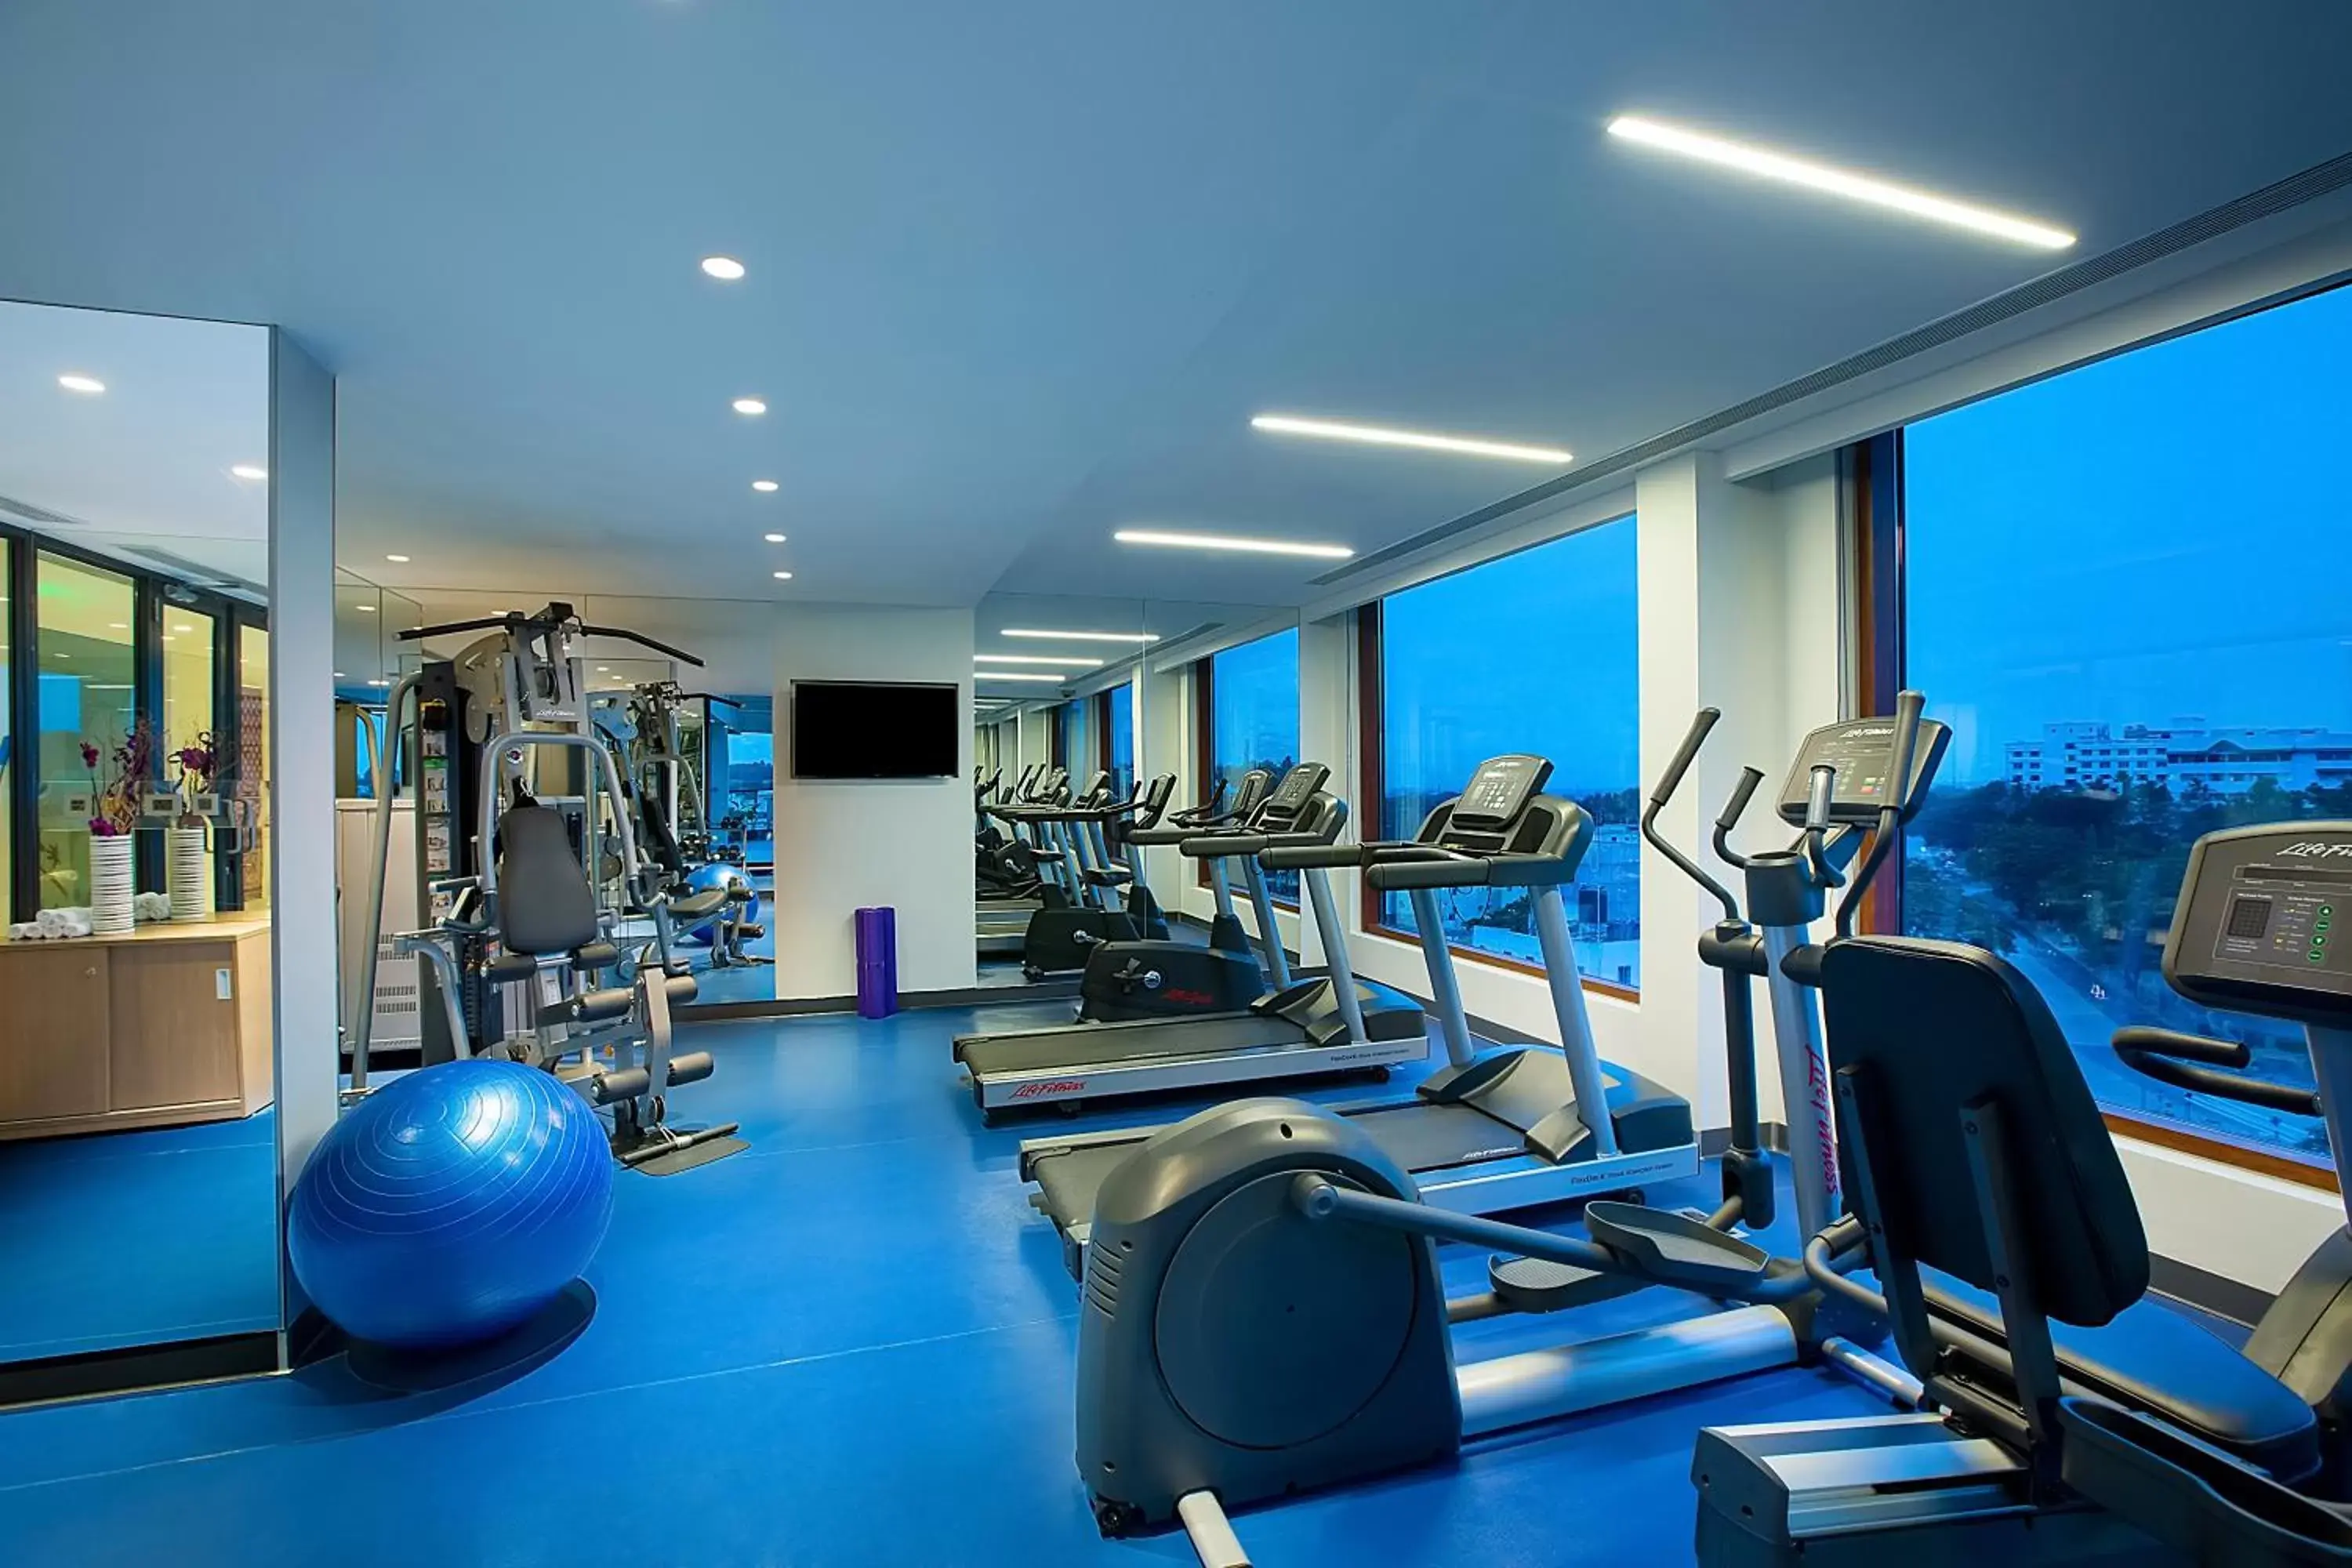 Fitness centre/facilities, Fitness Center/Facilities in Grand Mercure Mysore - An Accor Brand